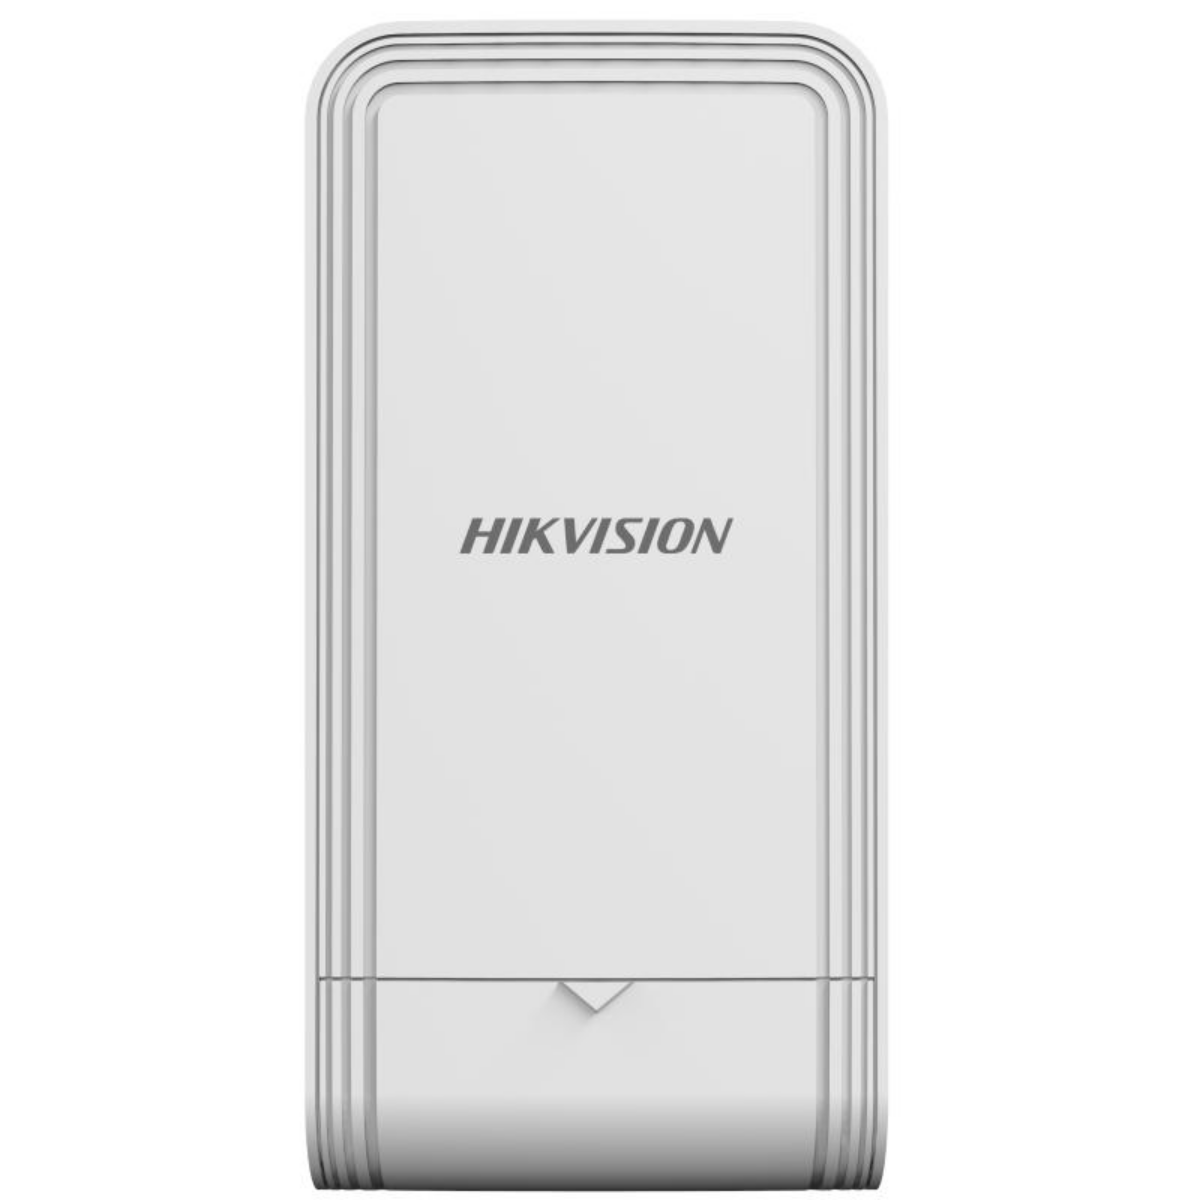 Hikvision Outdoor Wireless Bridge CPE – DS-3WF02C-5AC/O